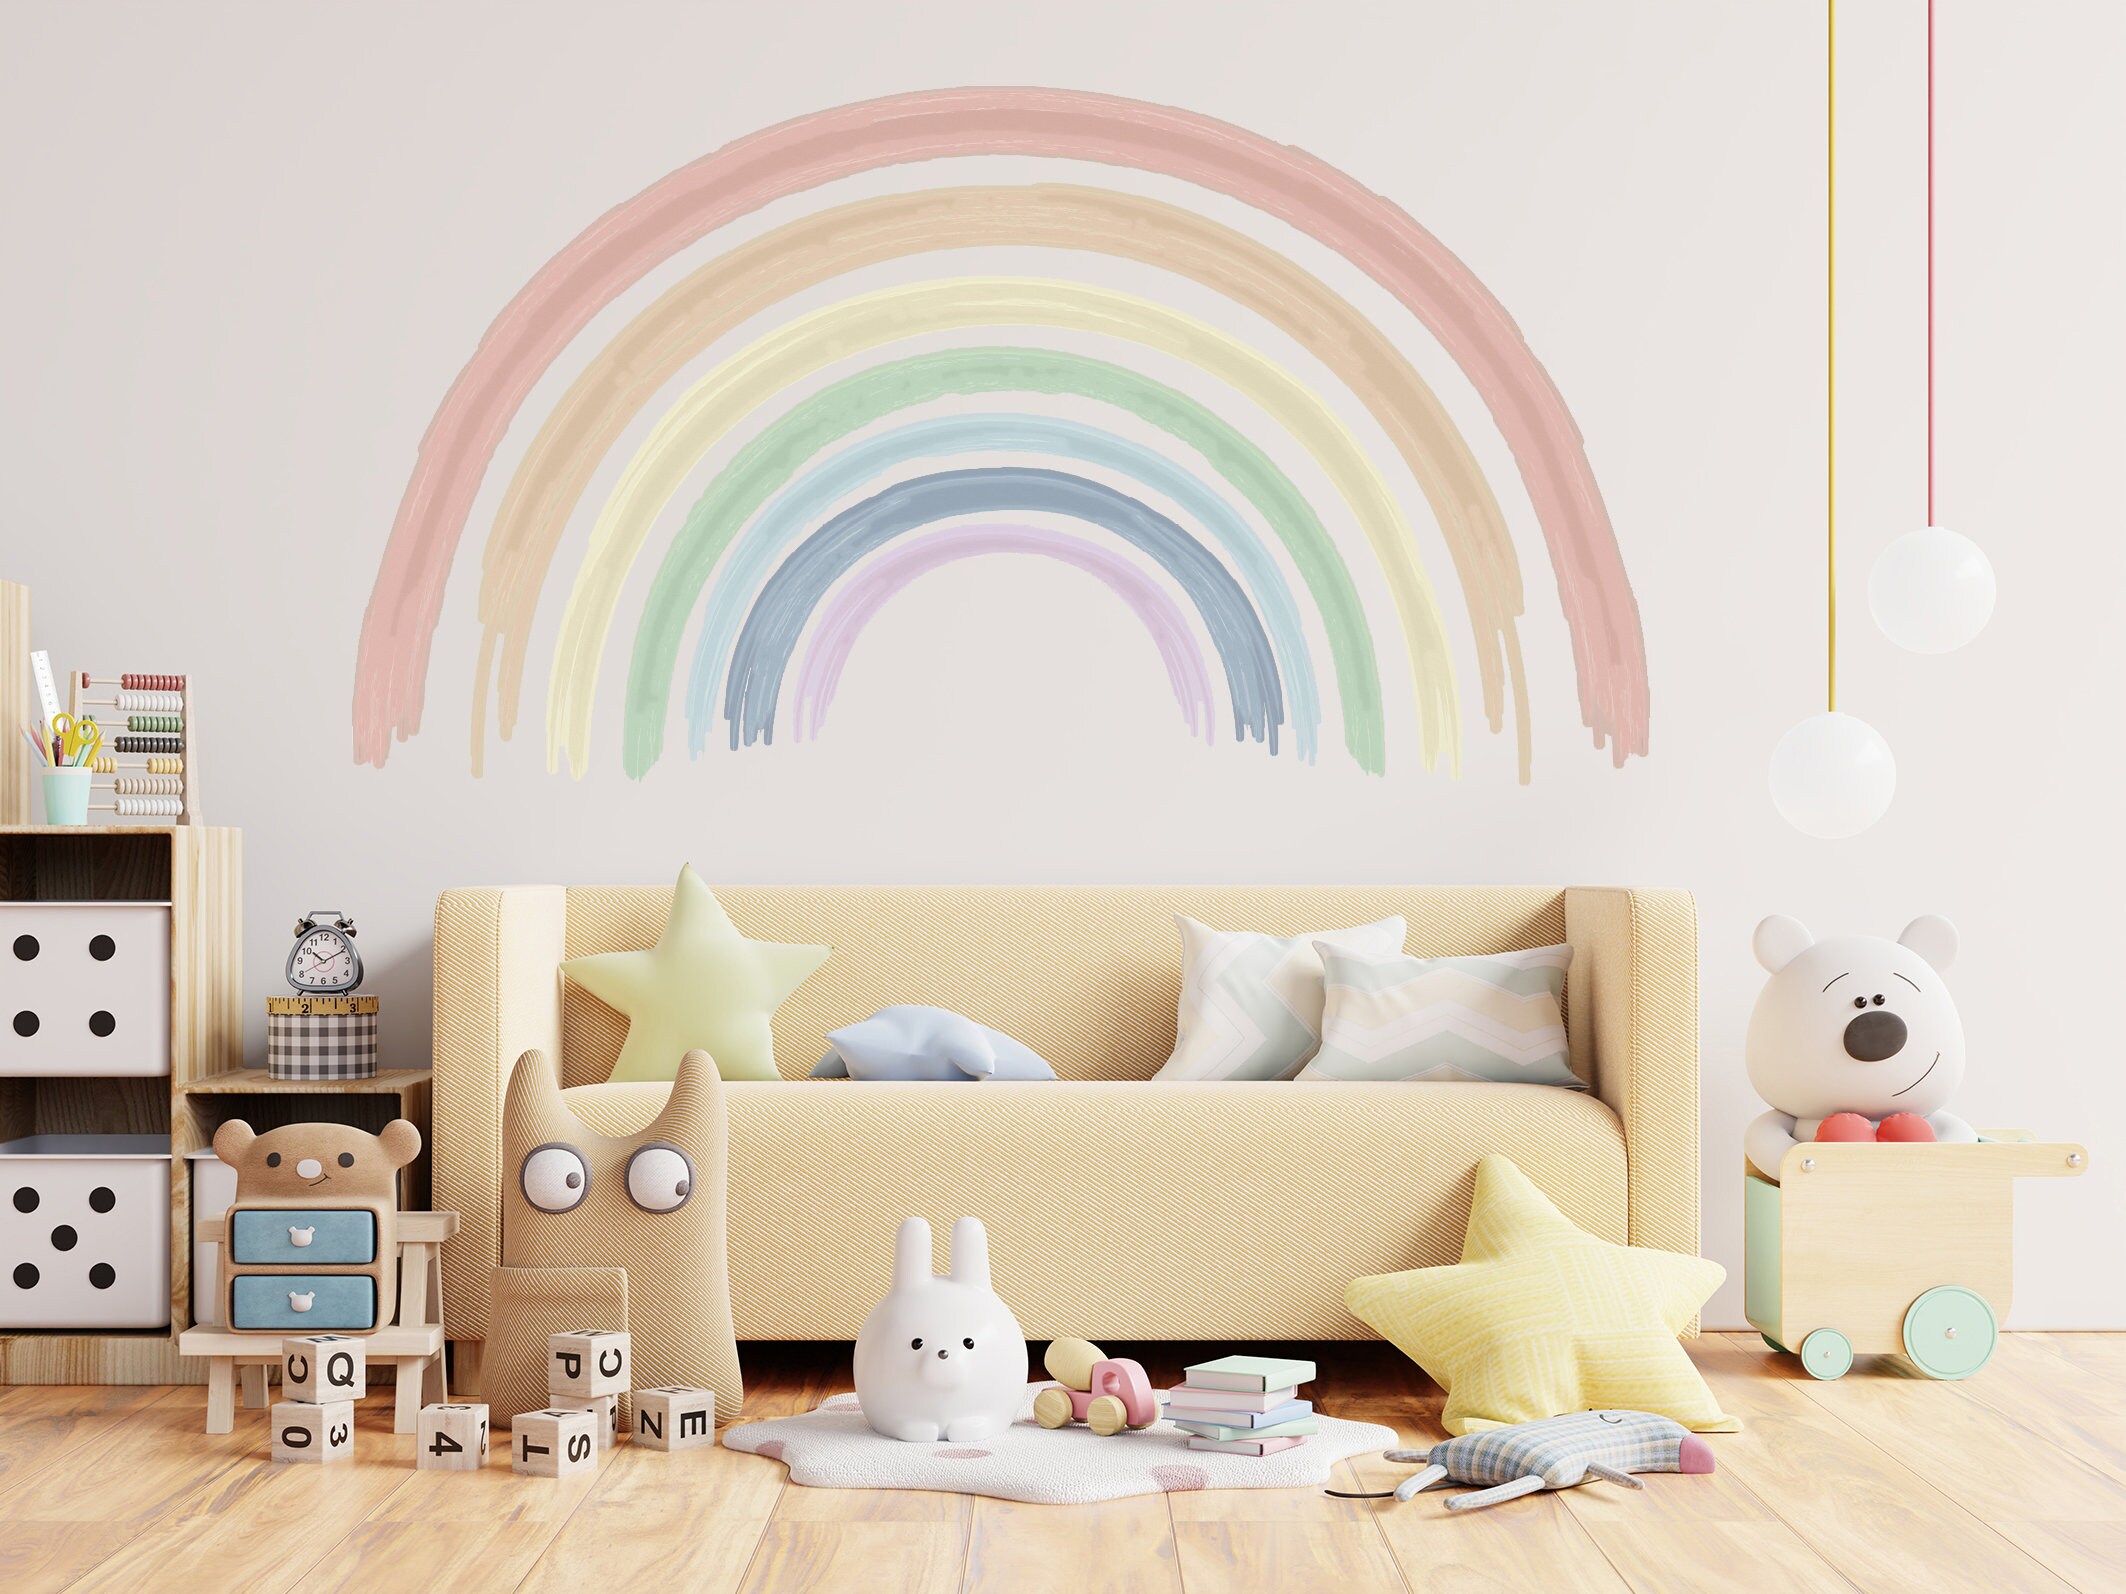 Pastel Rainbow Wall Decal Girl Nursery Decor - Bed Bath & Beyond - 34123827